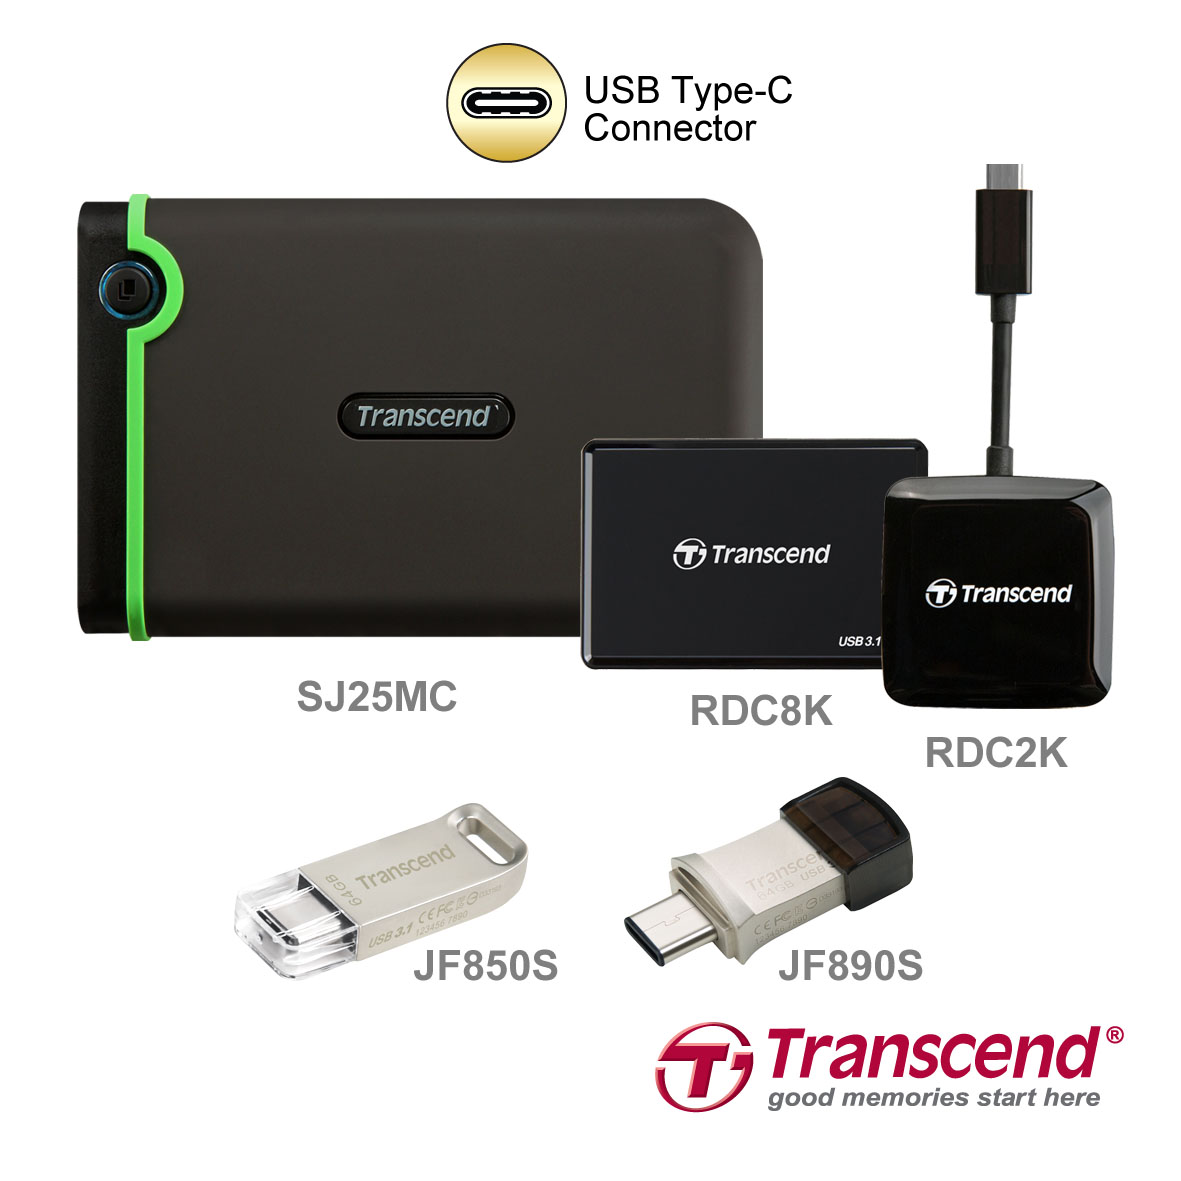 Transcend Introduces Comprehensive USB Type-C Product Line-up